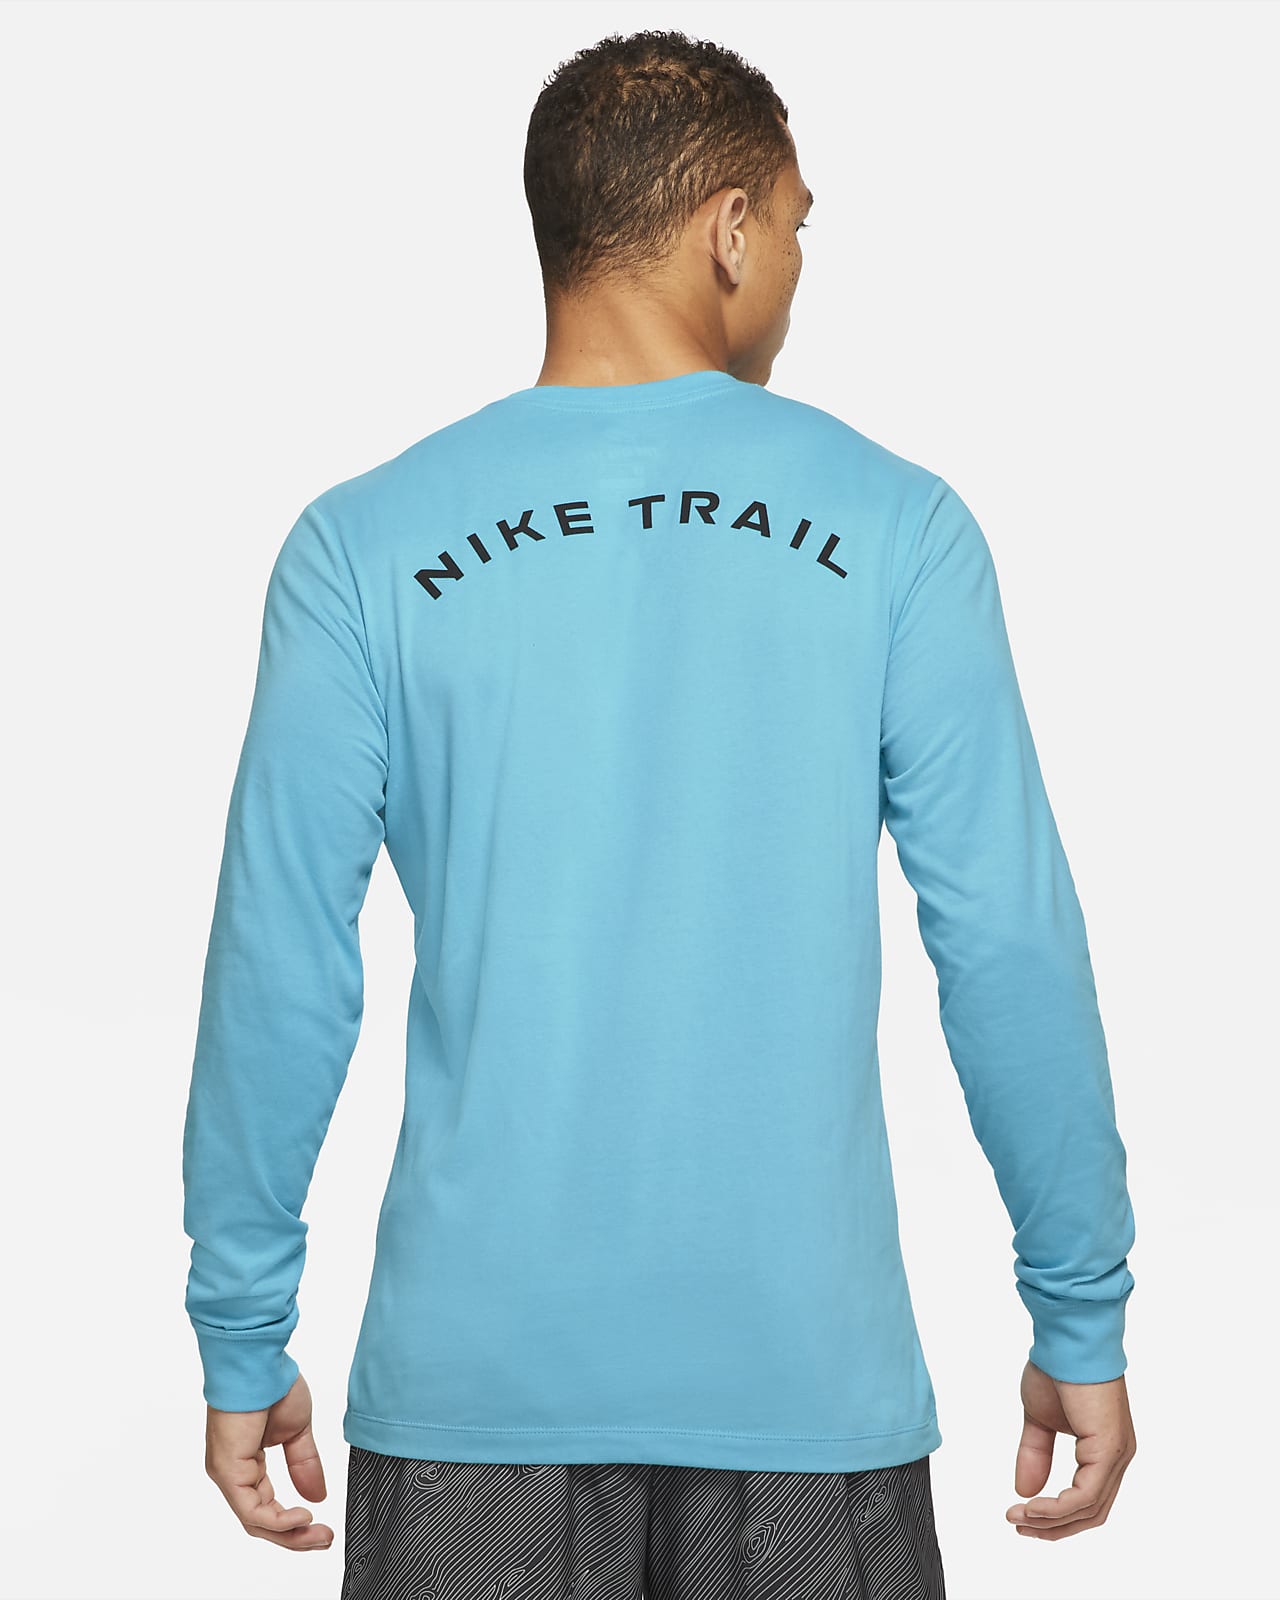 Buy > nike dri fit long sleeve shirt > in stock